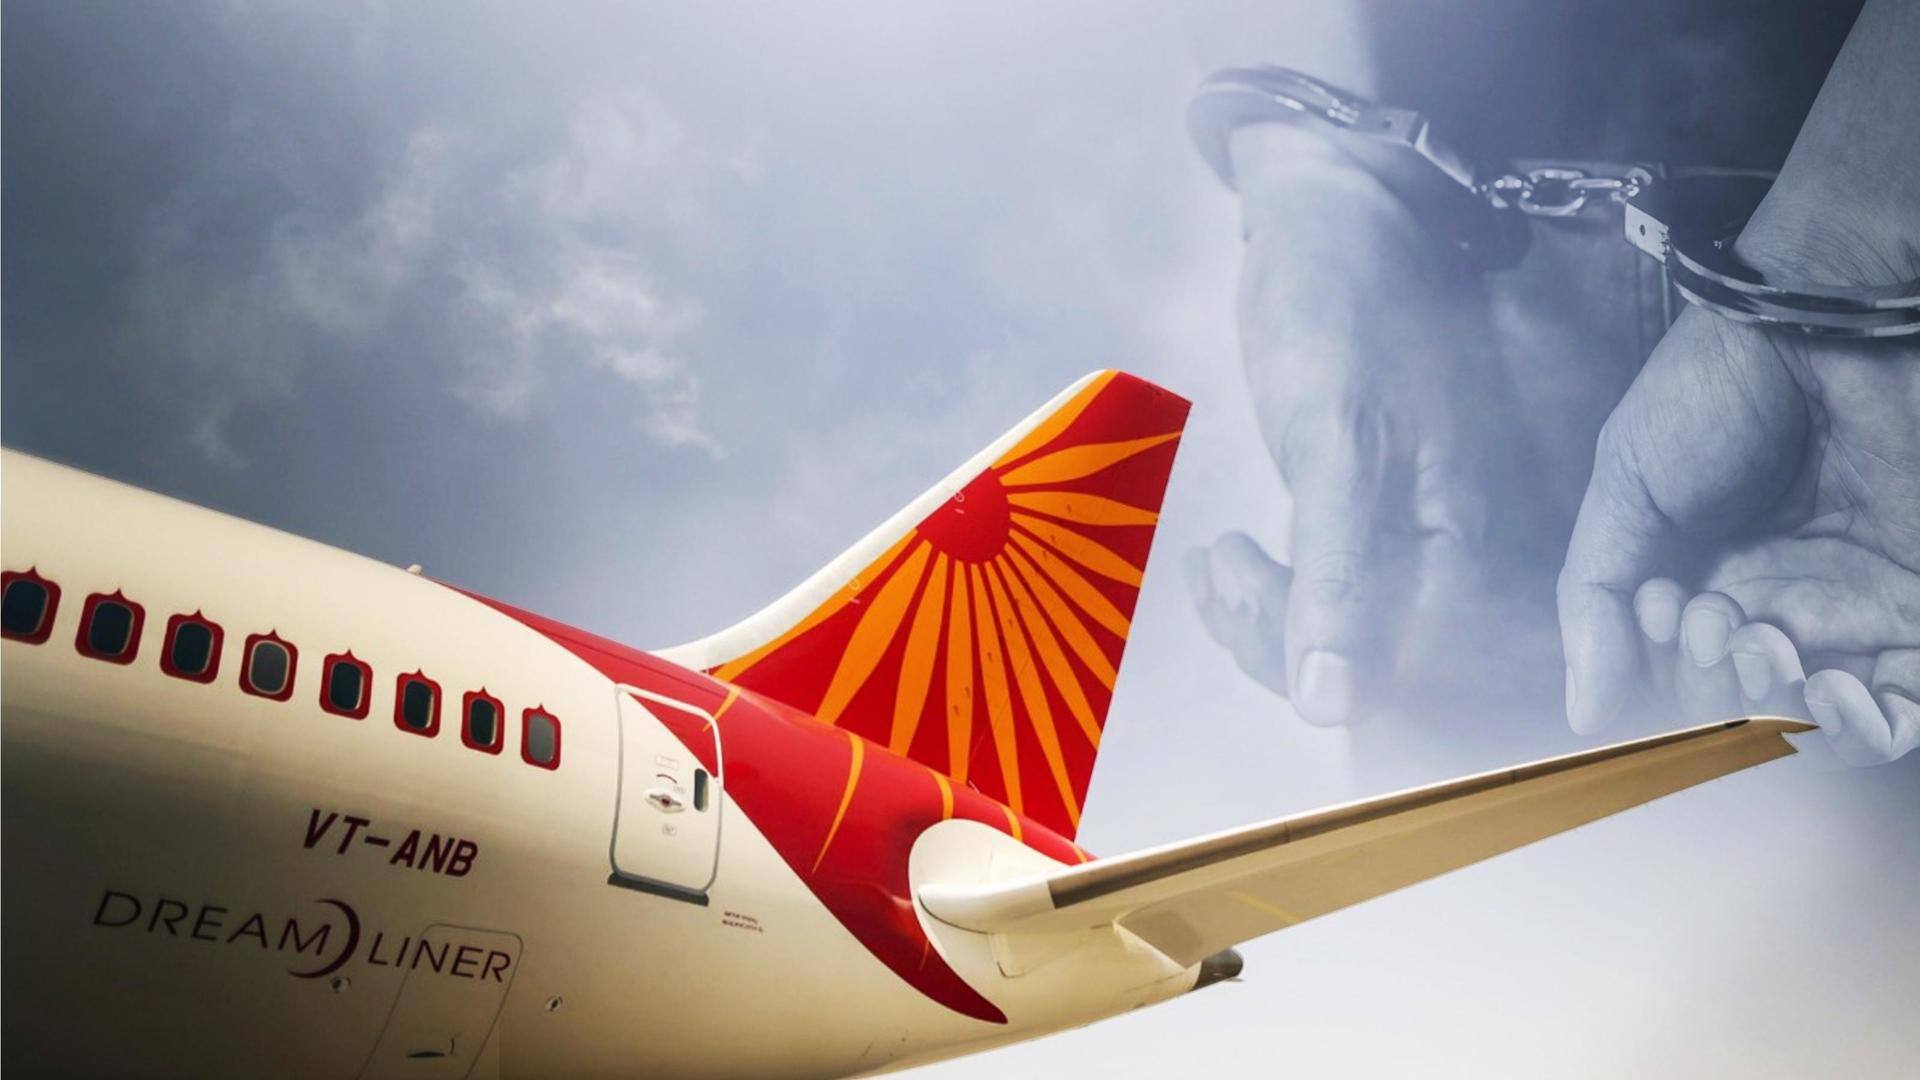 Air India's Delhi-London flight reverts after passenger 'harms' crew: Reports